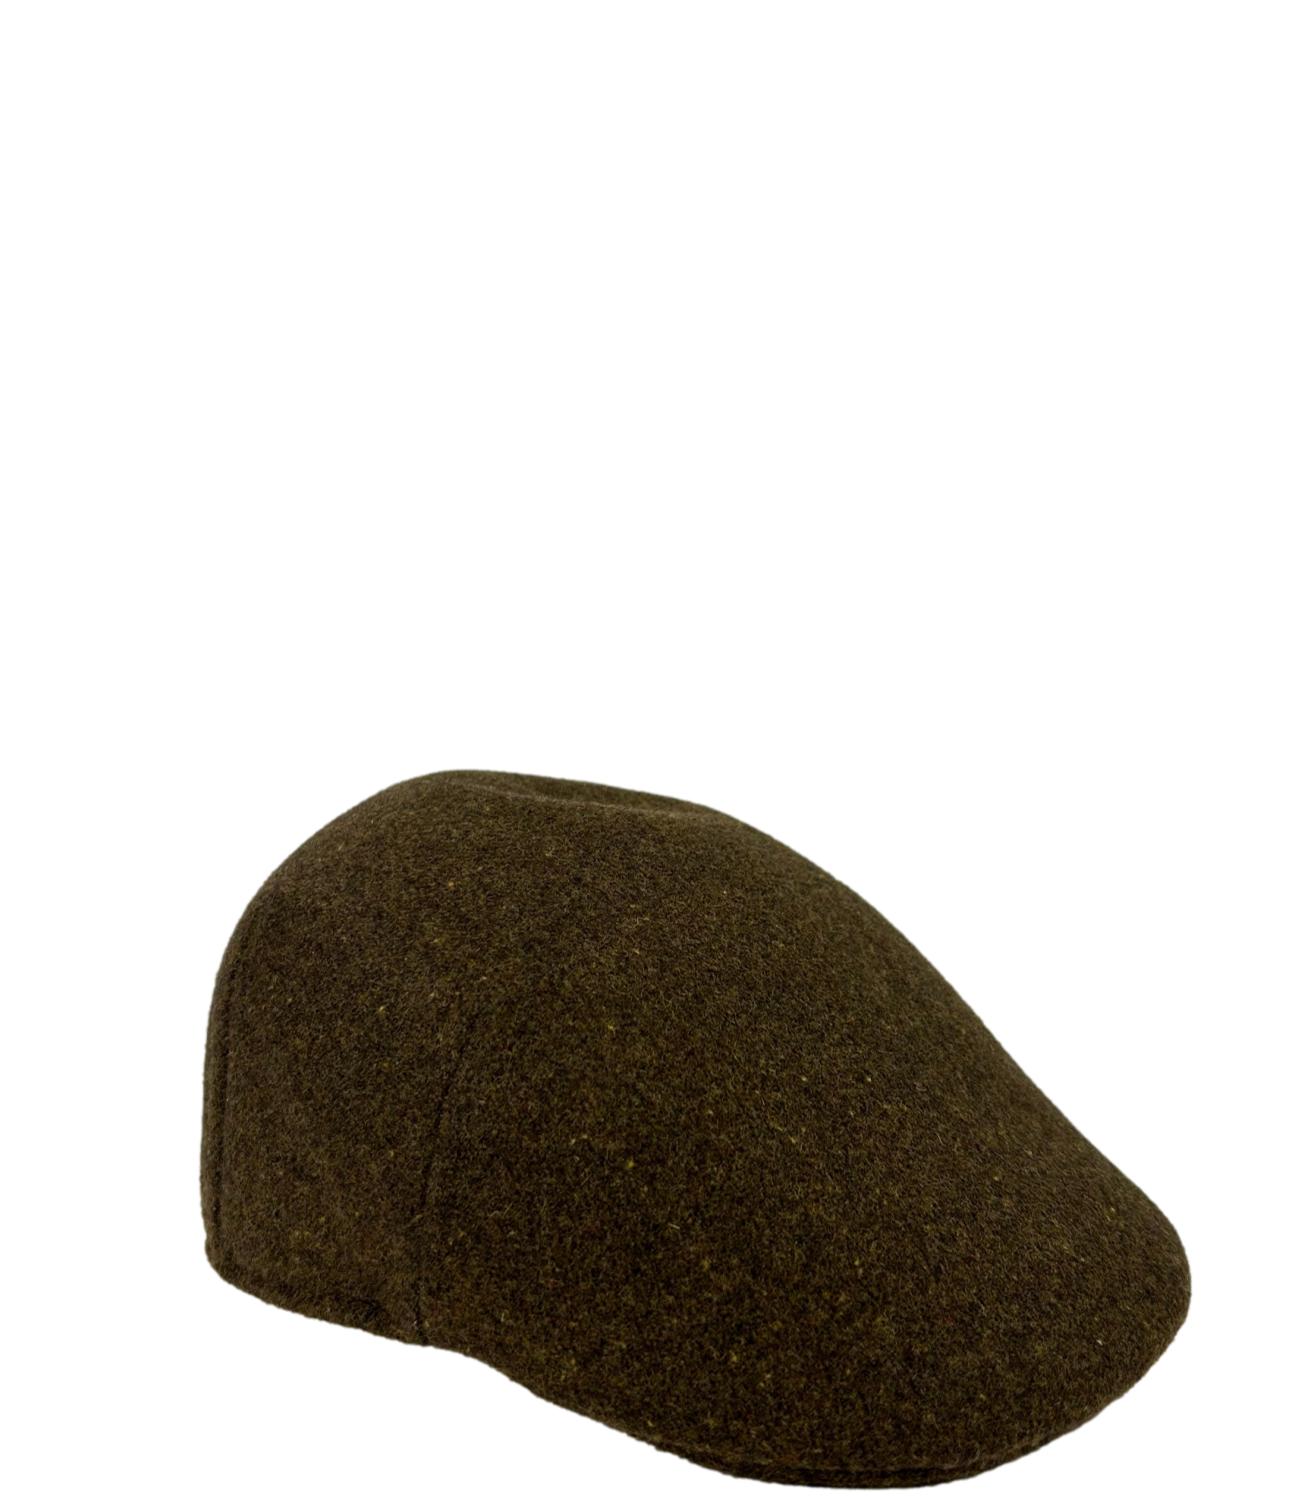 Men's stick cap in mud green wool